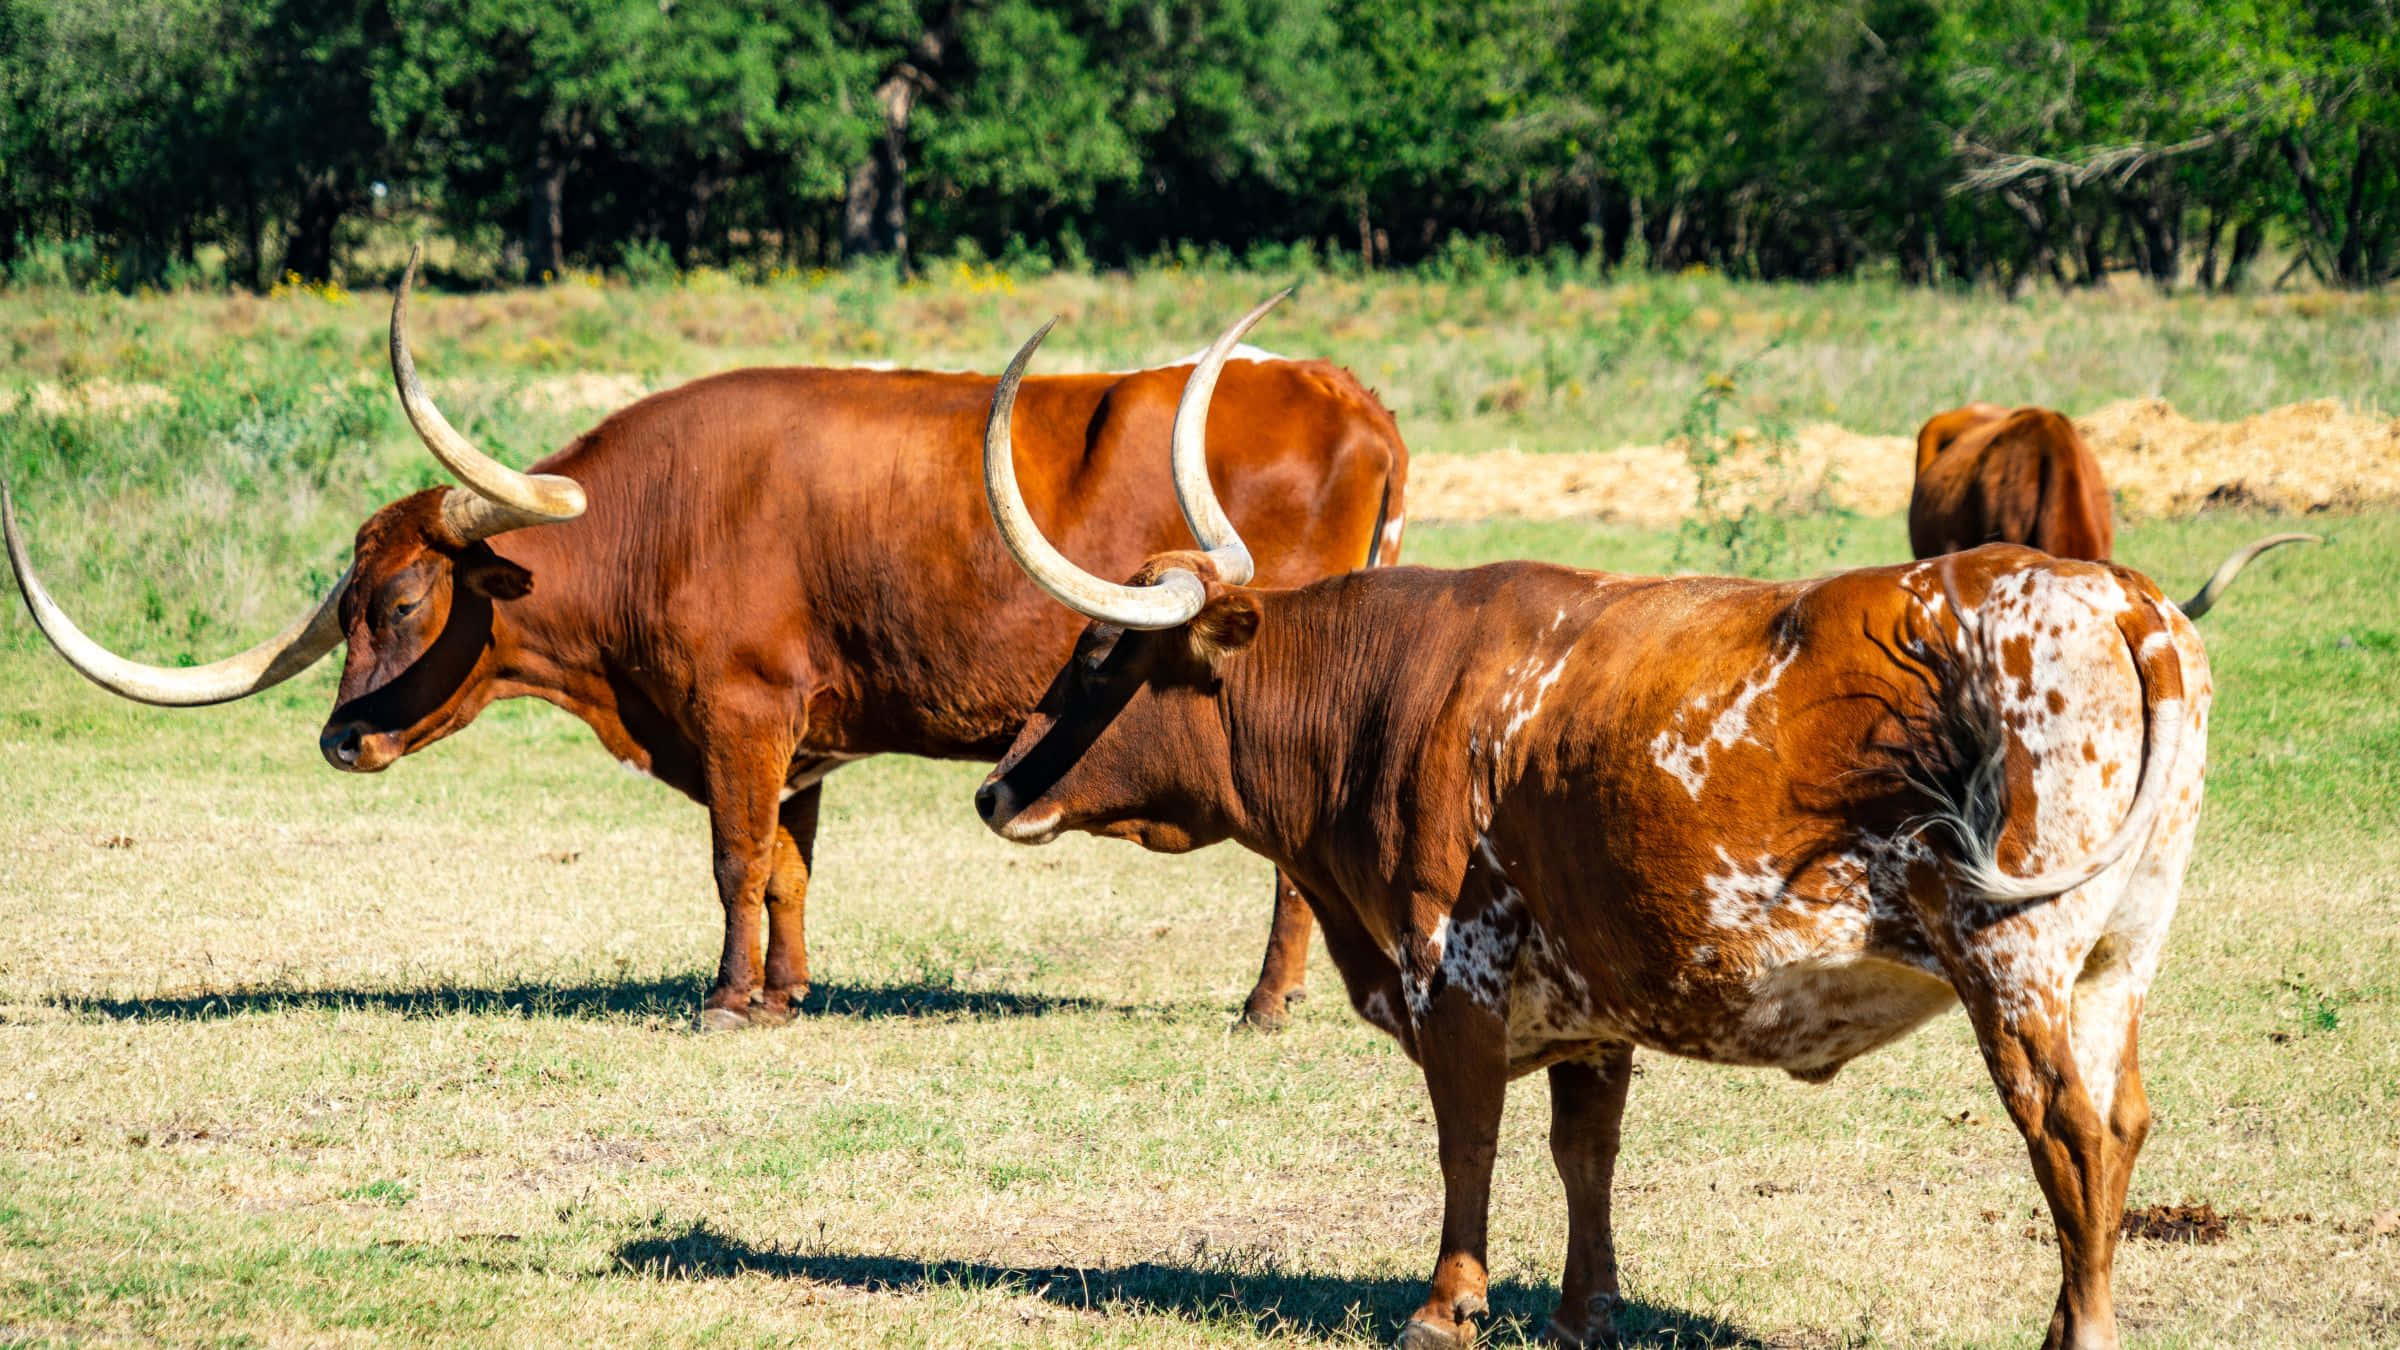 Two Horned Cattle In A Field